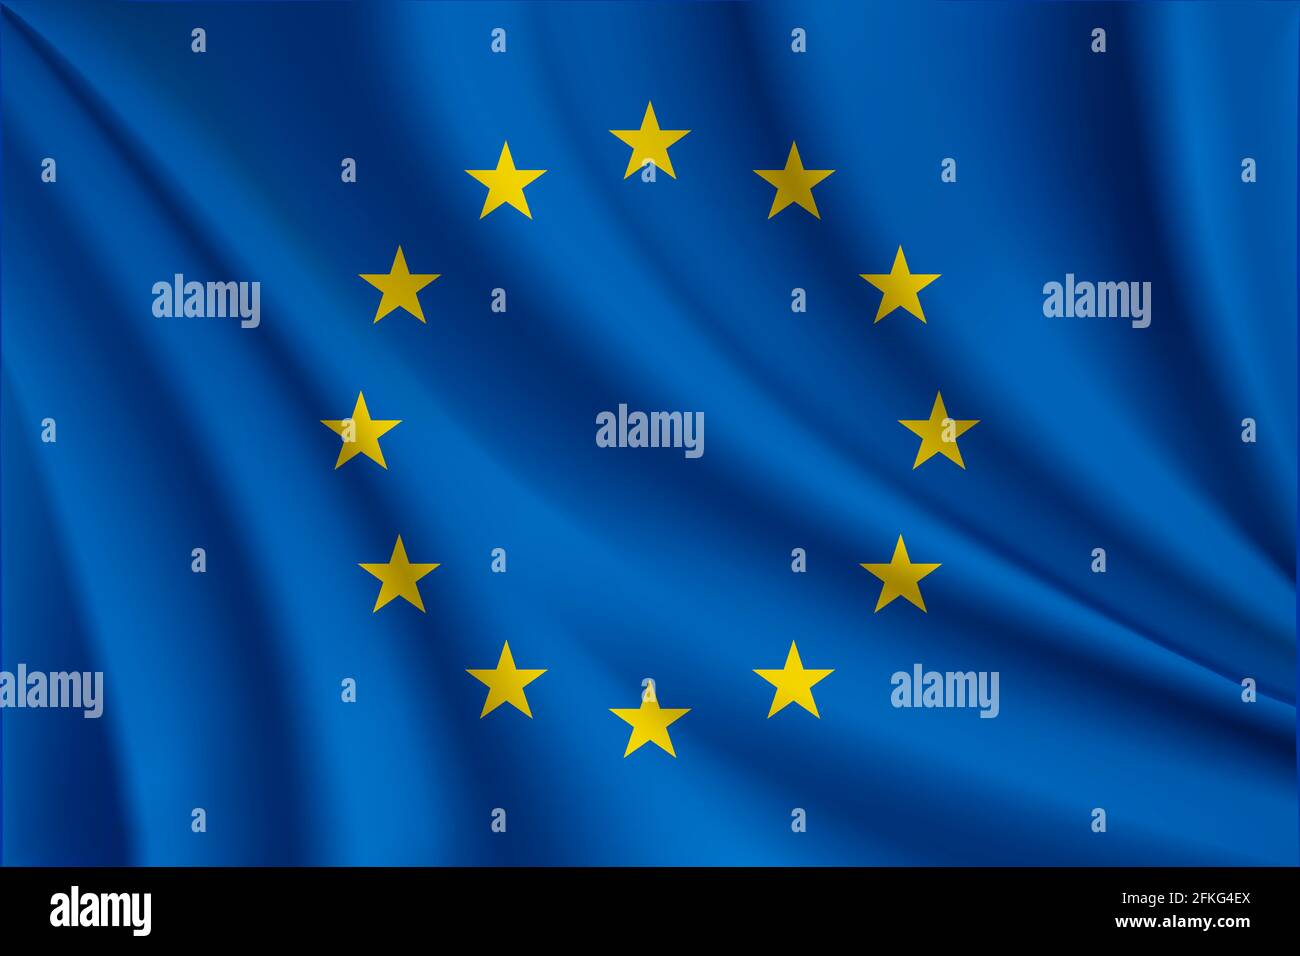 European union flag realistic illustration Stock Vector